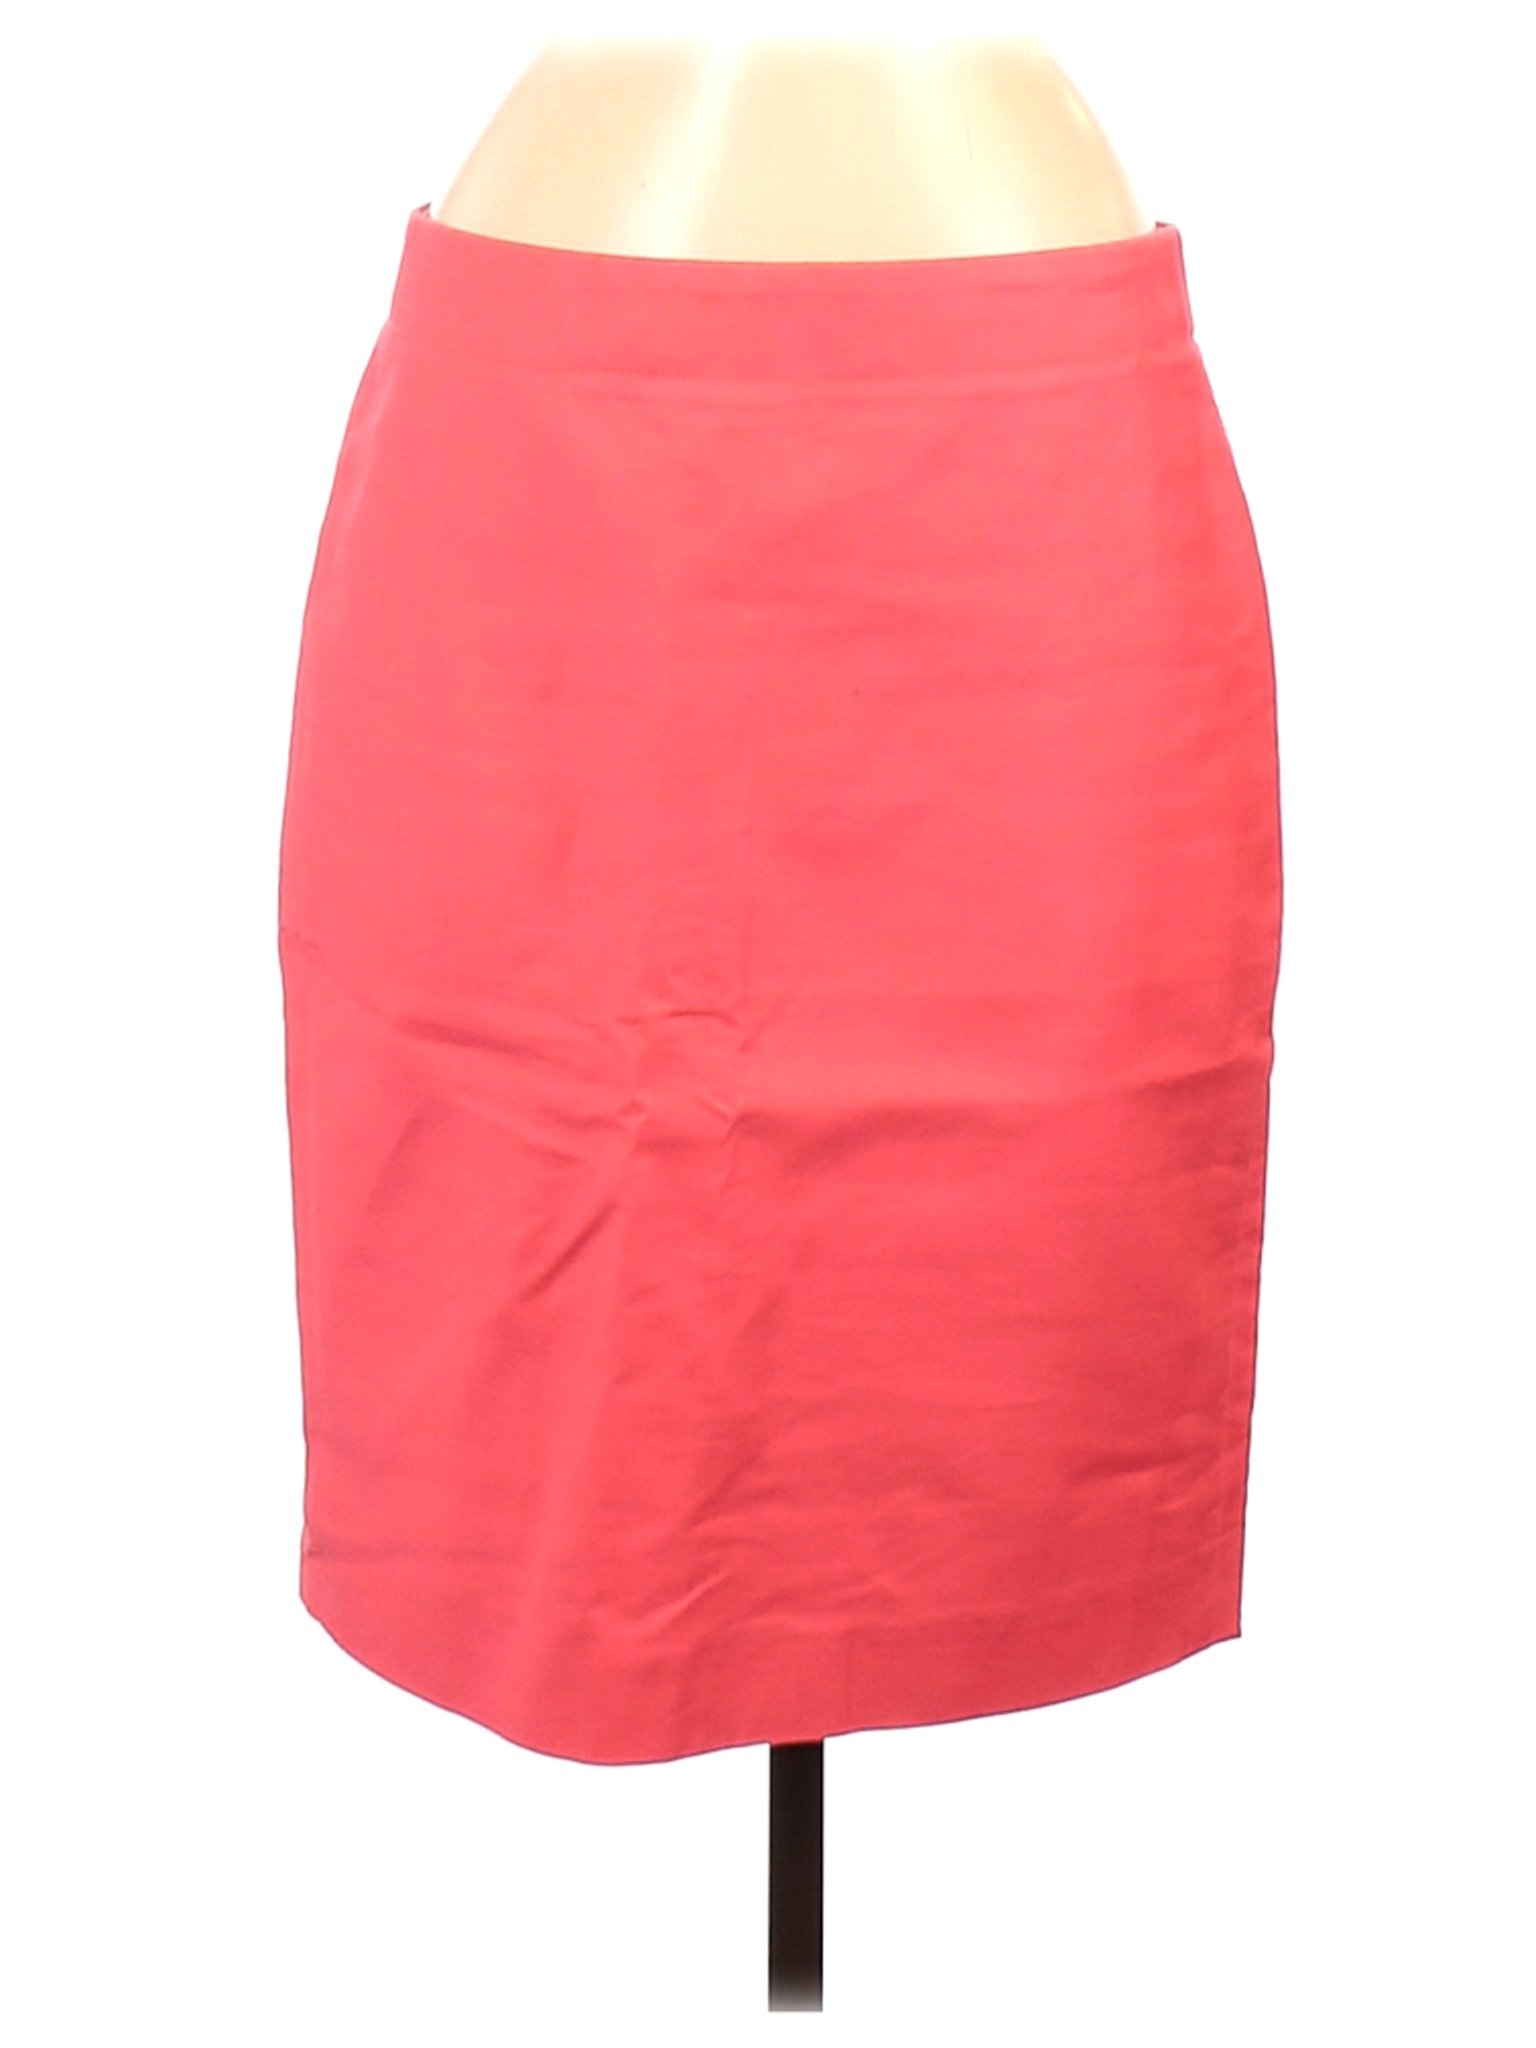 J.Crew Women Pink Casual Skirt 8 | eBay